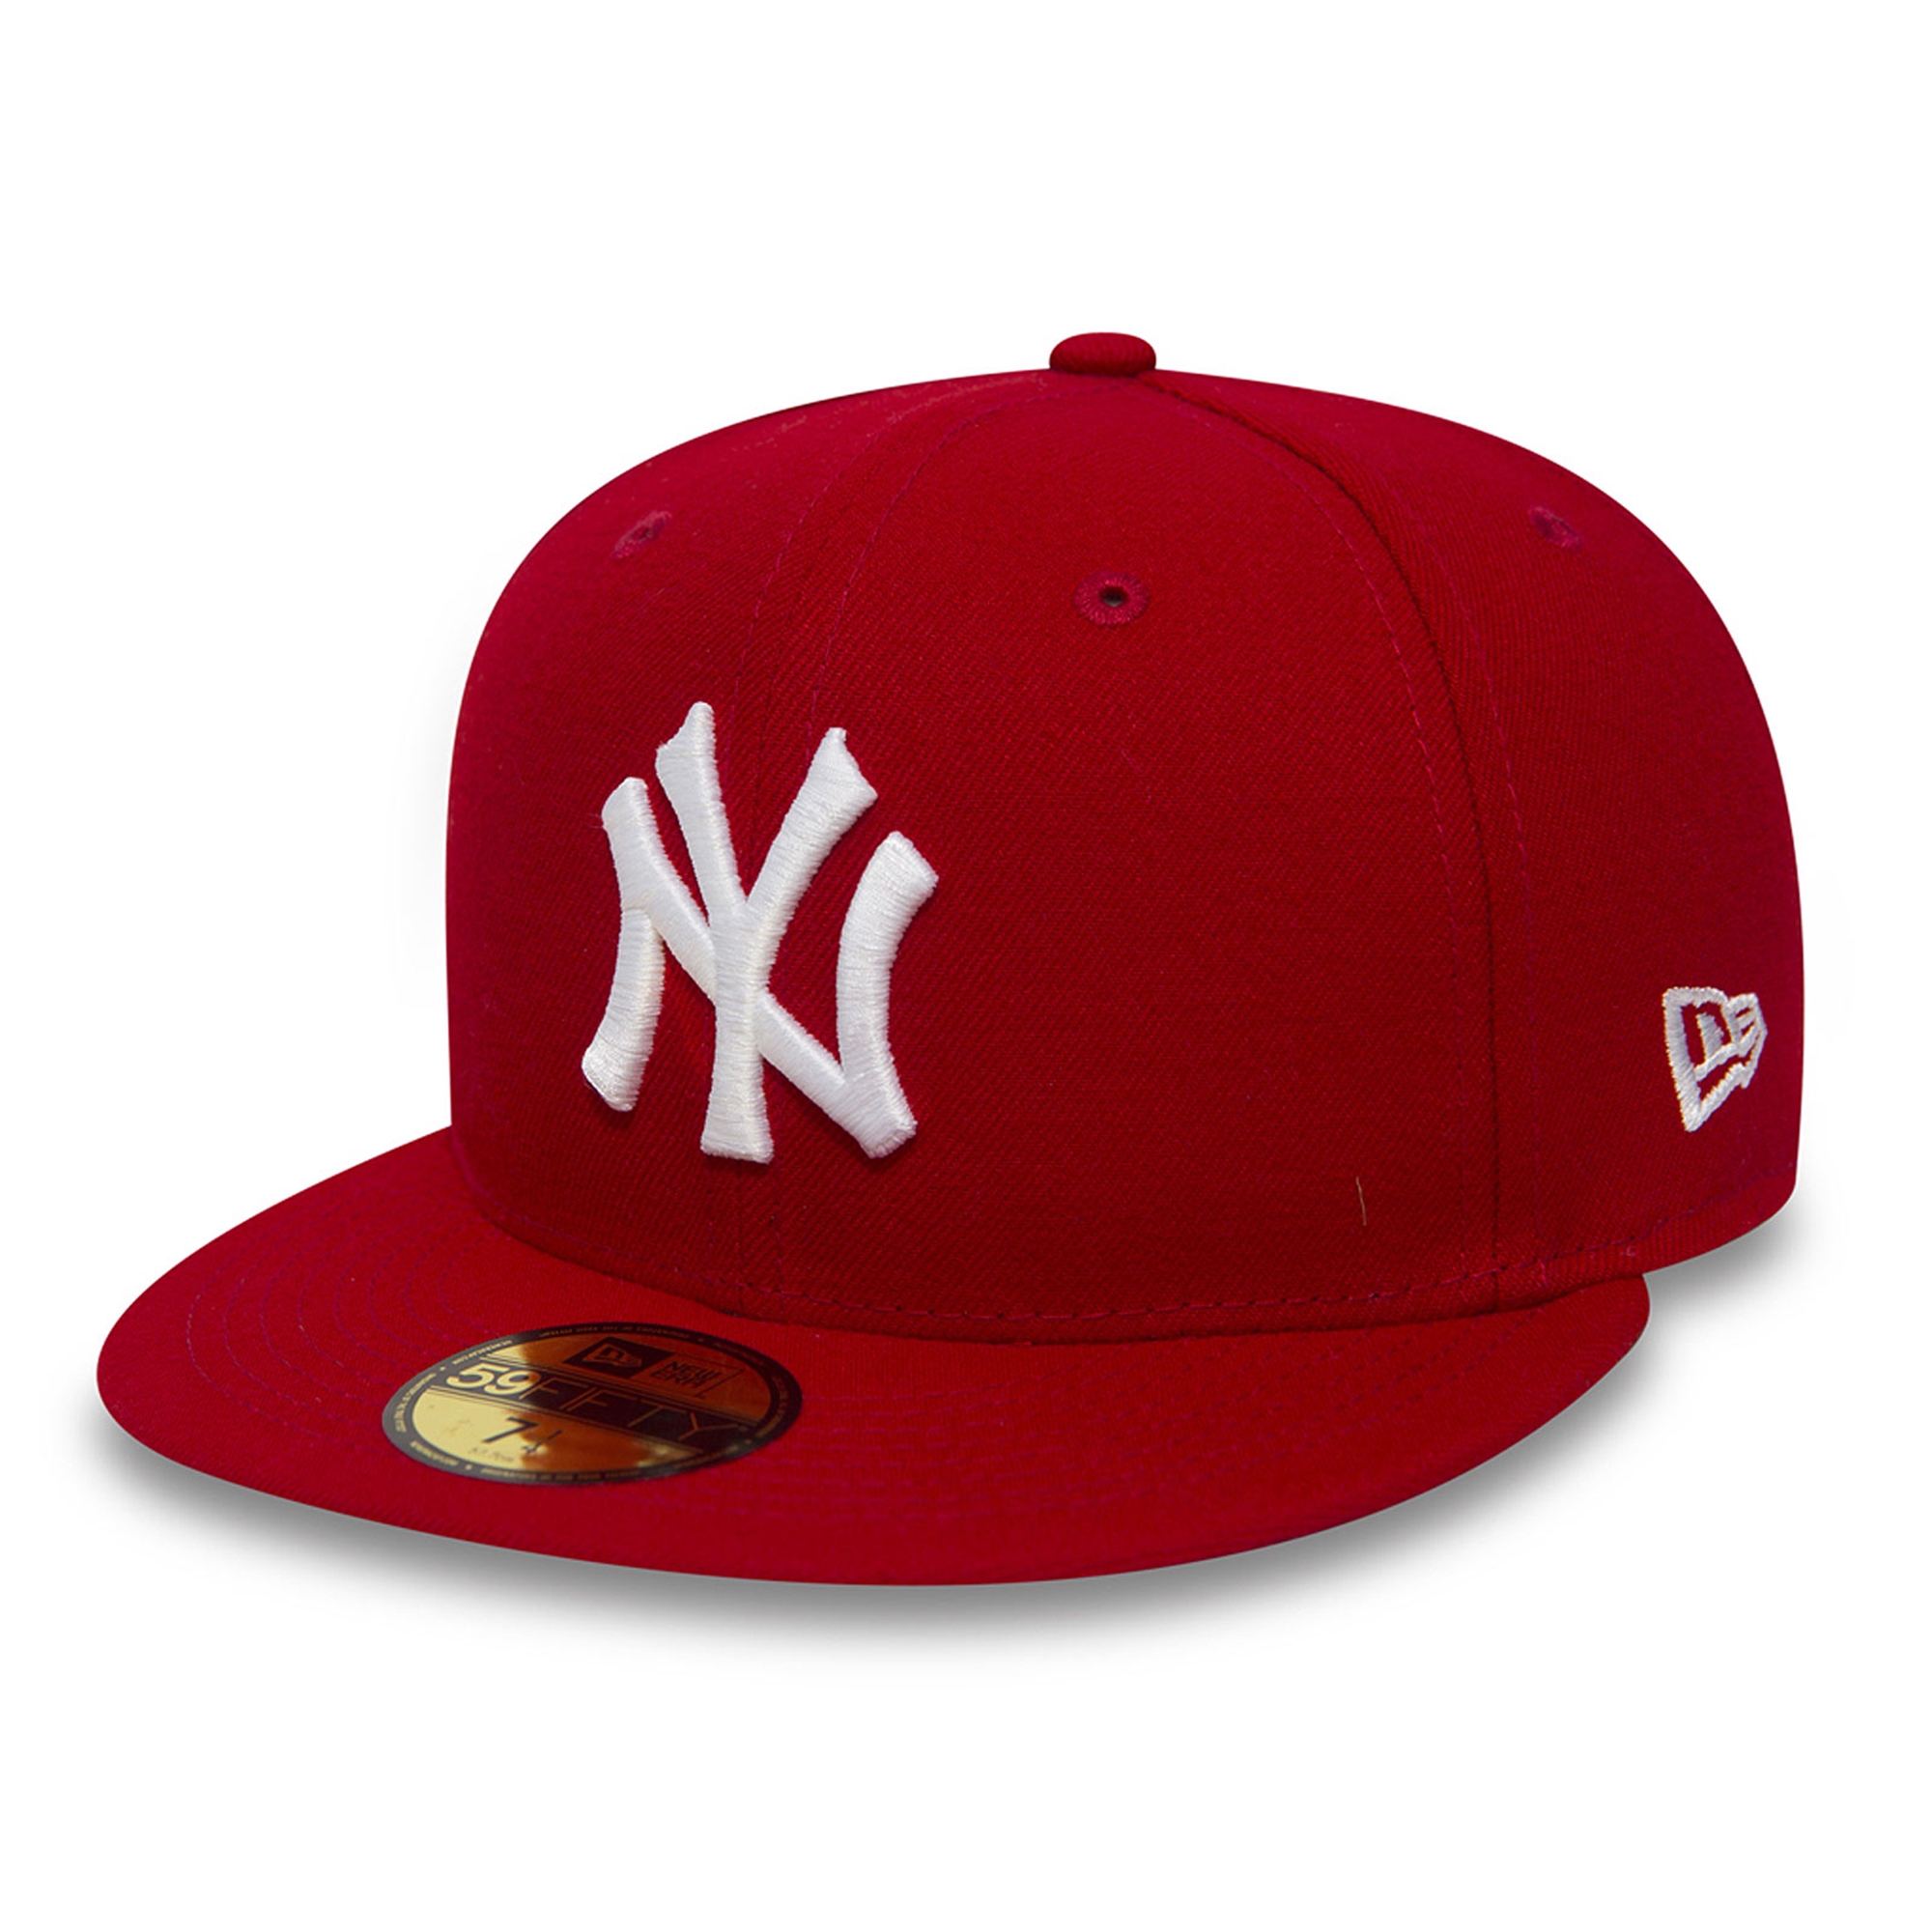 New Basecap York 59Fifty MLB Fitted Era Cap eBay New Baseball Yankees | Cap